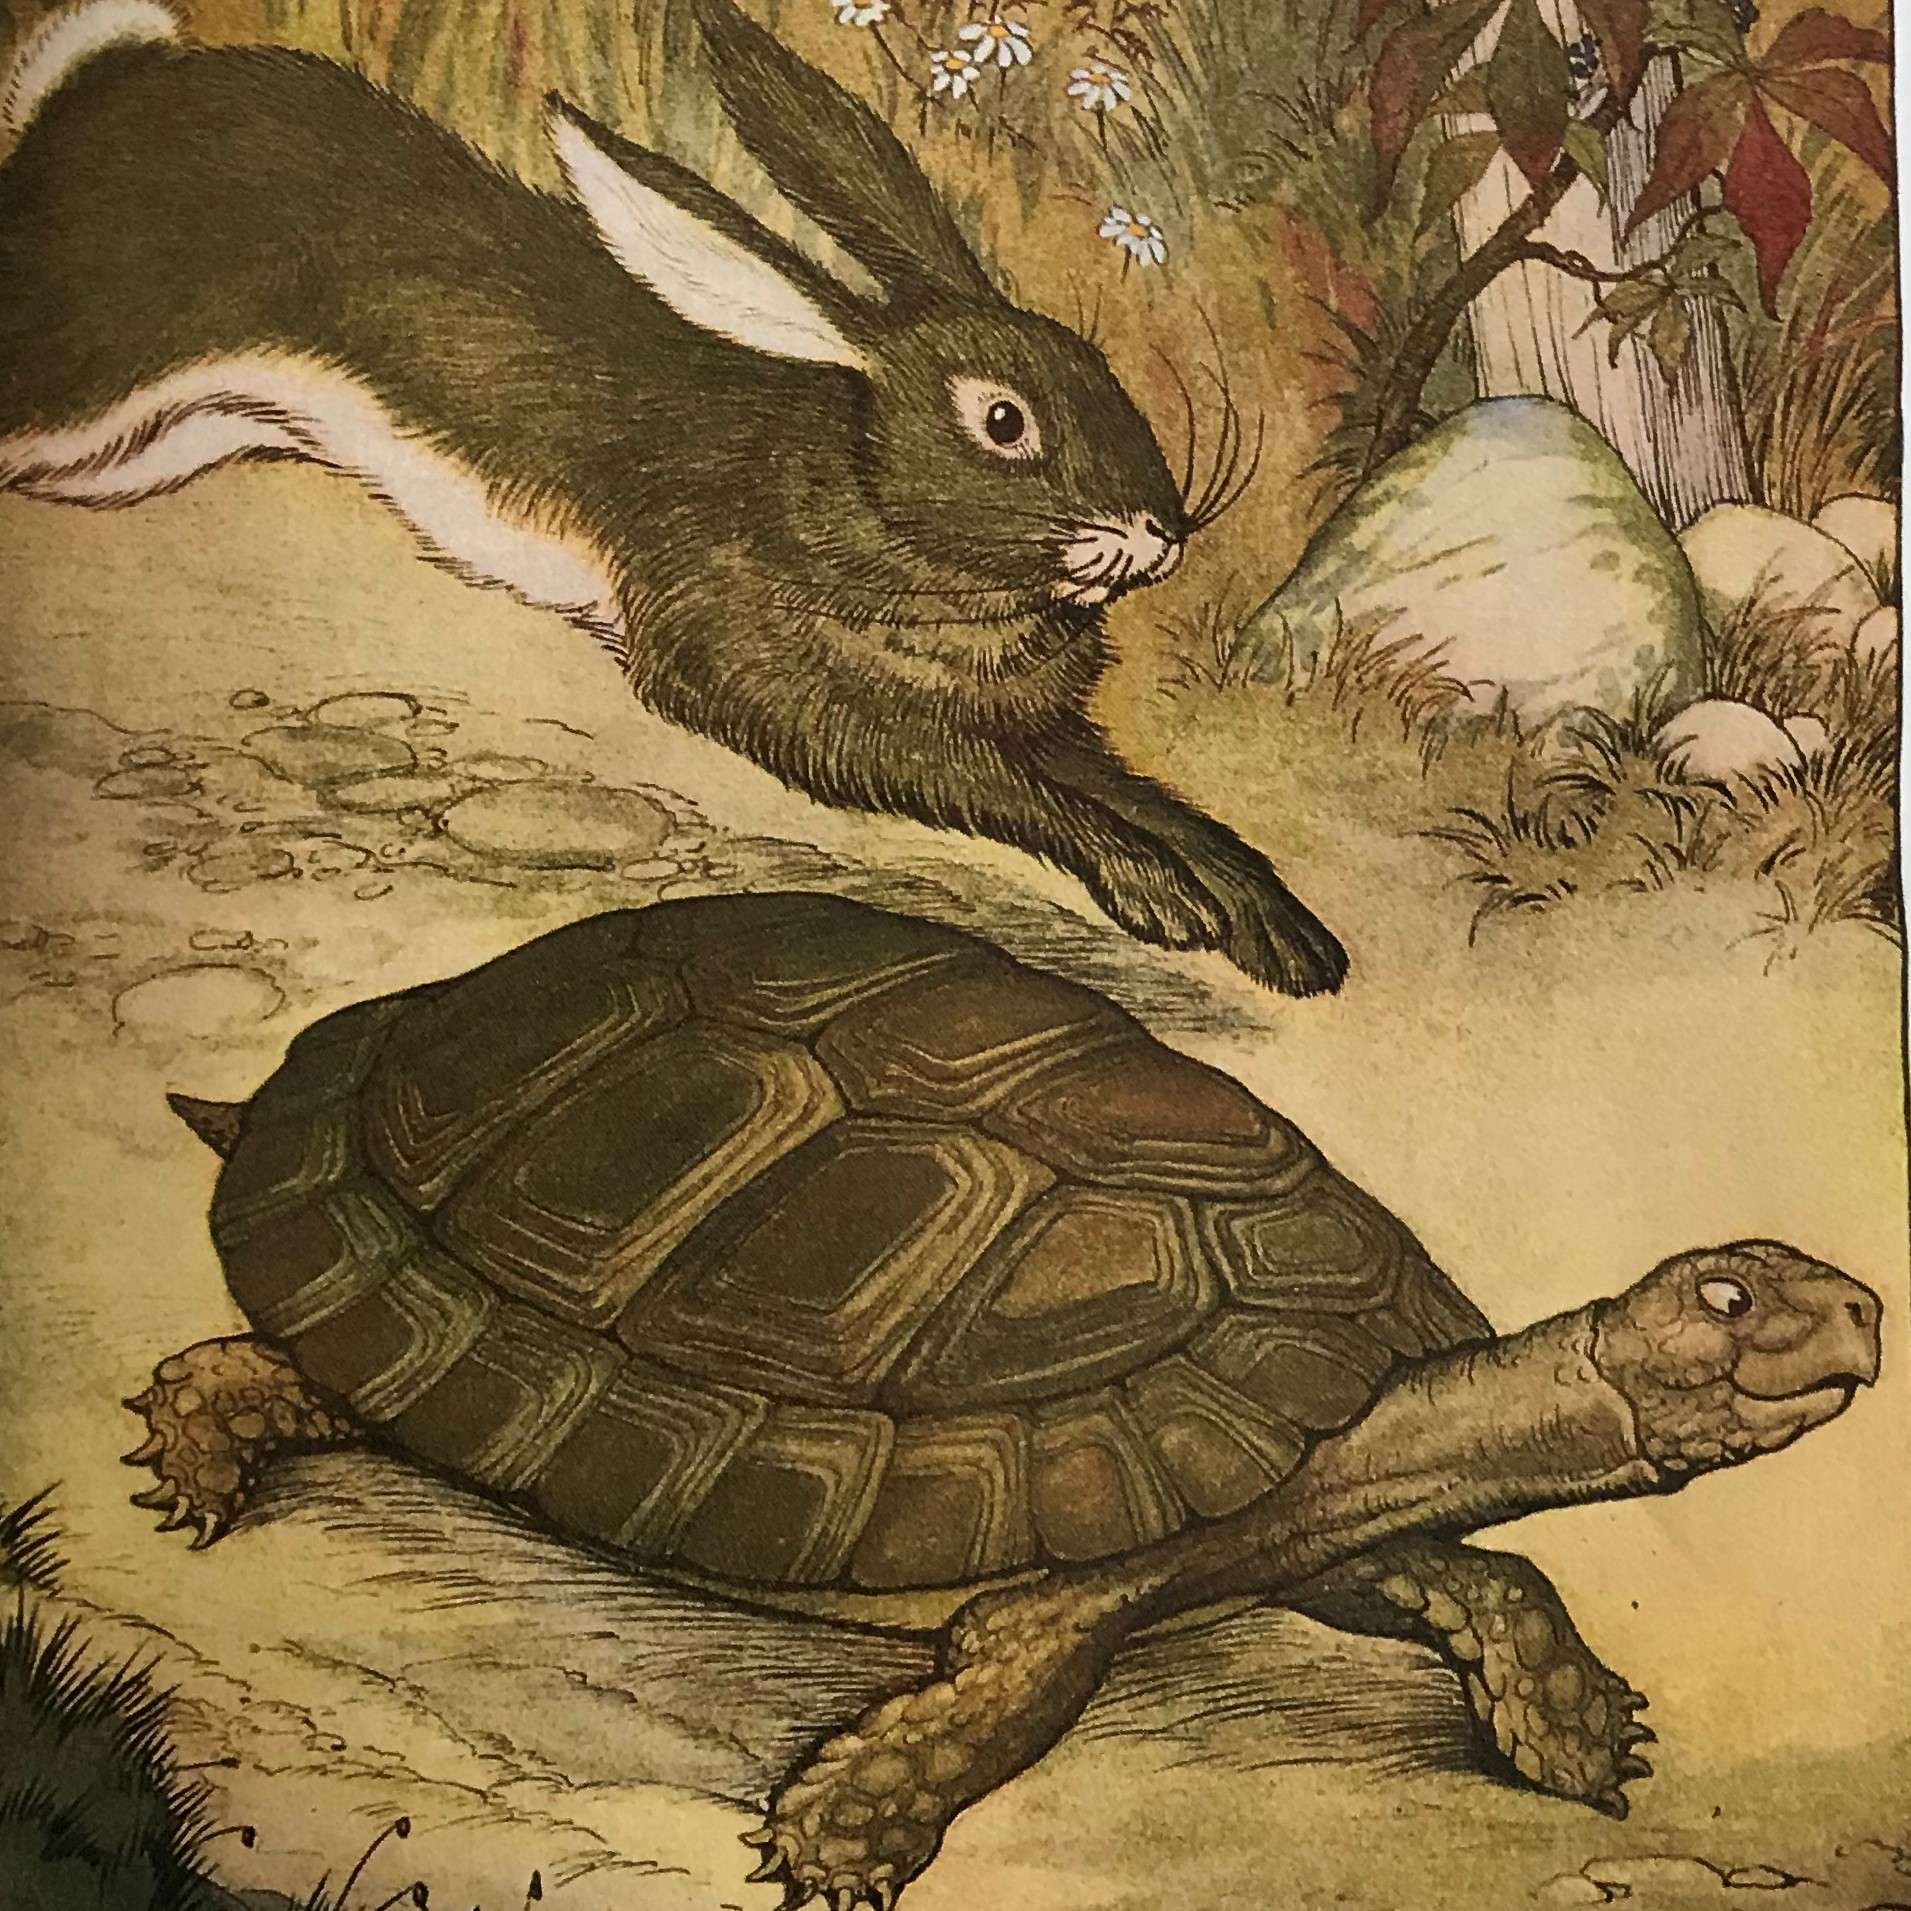 Заяц и черепаха 4 класс. Сказка the Hare and the Tortoise. Кролик и черепаха. Заяц и черепаха басня. Заяц и черепаха рисунок.